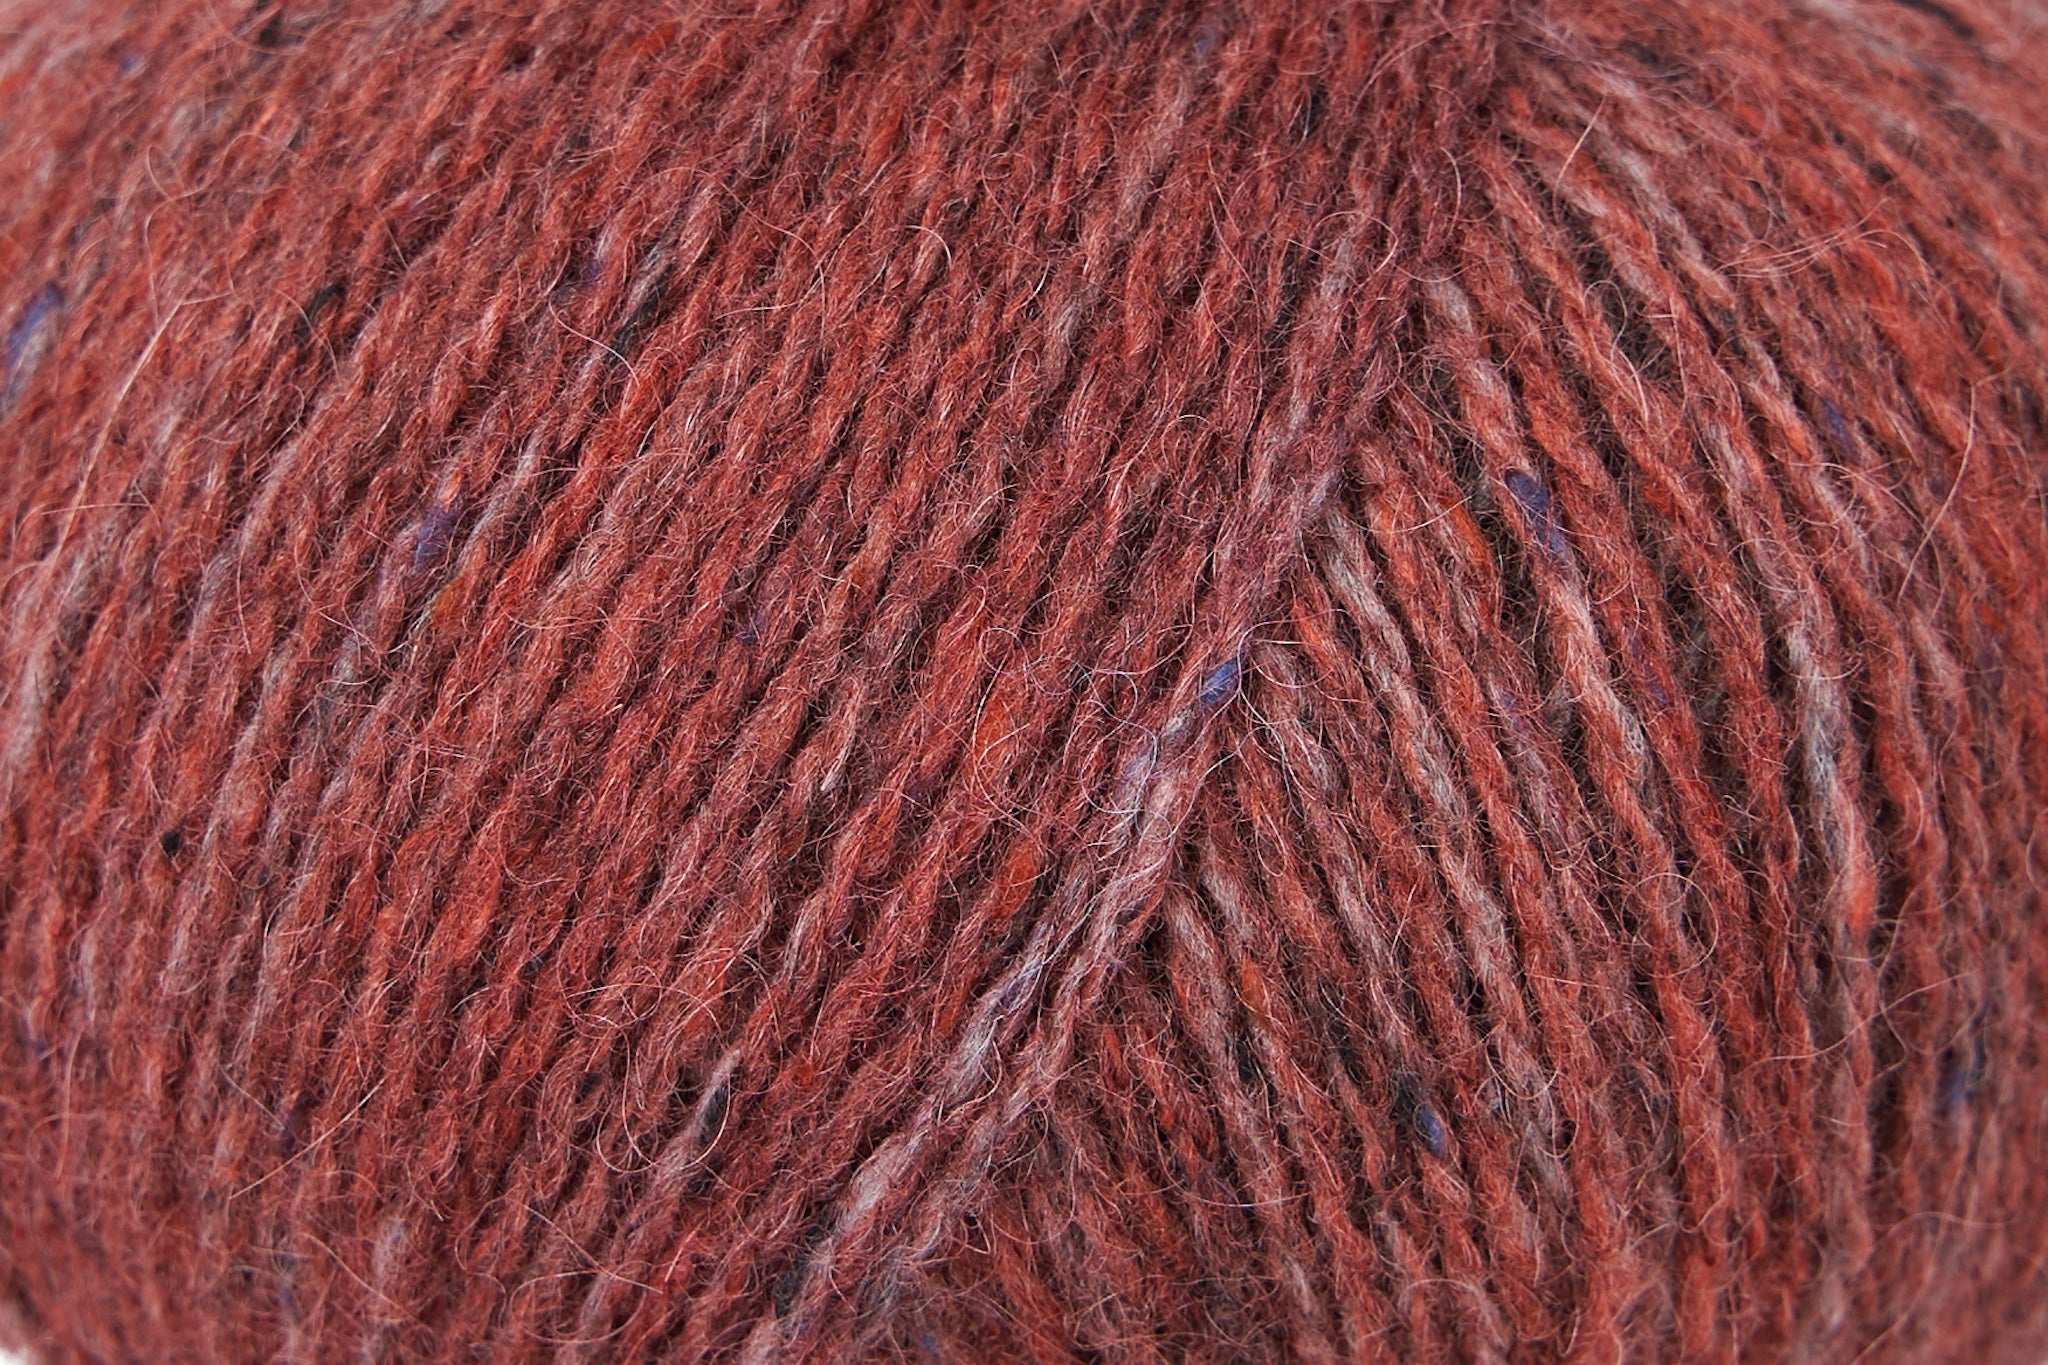 Rowan Felted Tweed Colours in Chestnut-024